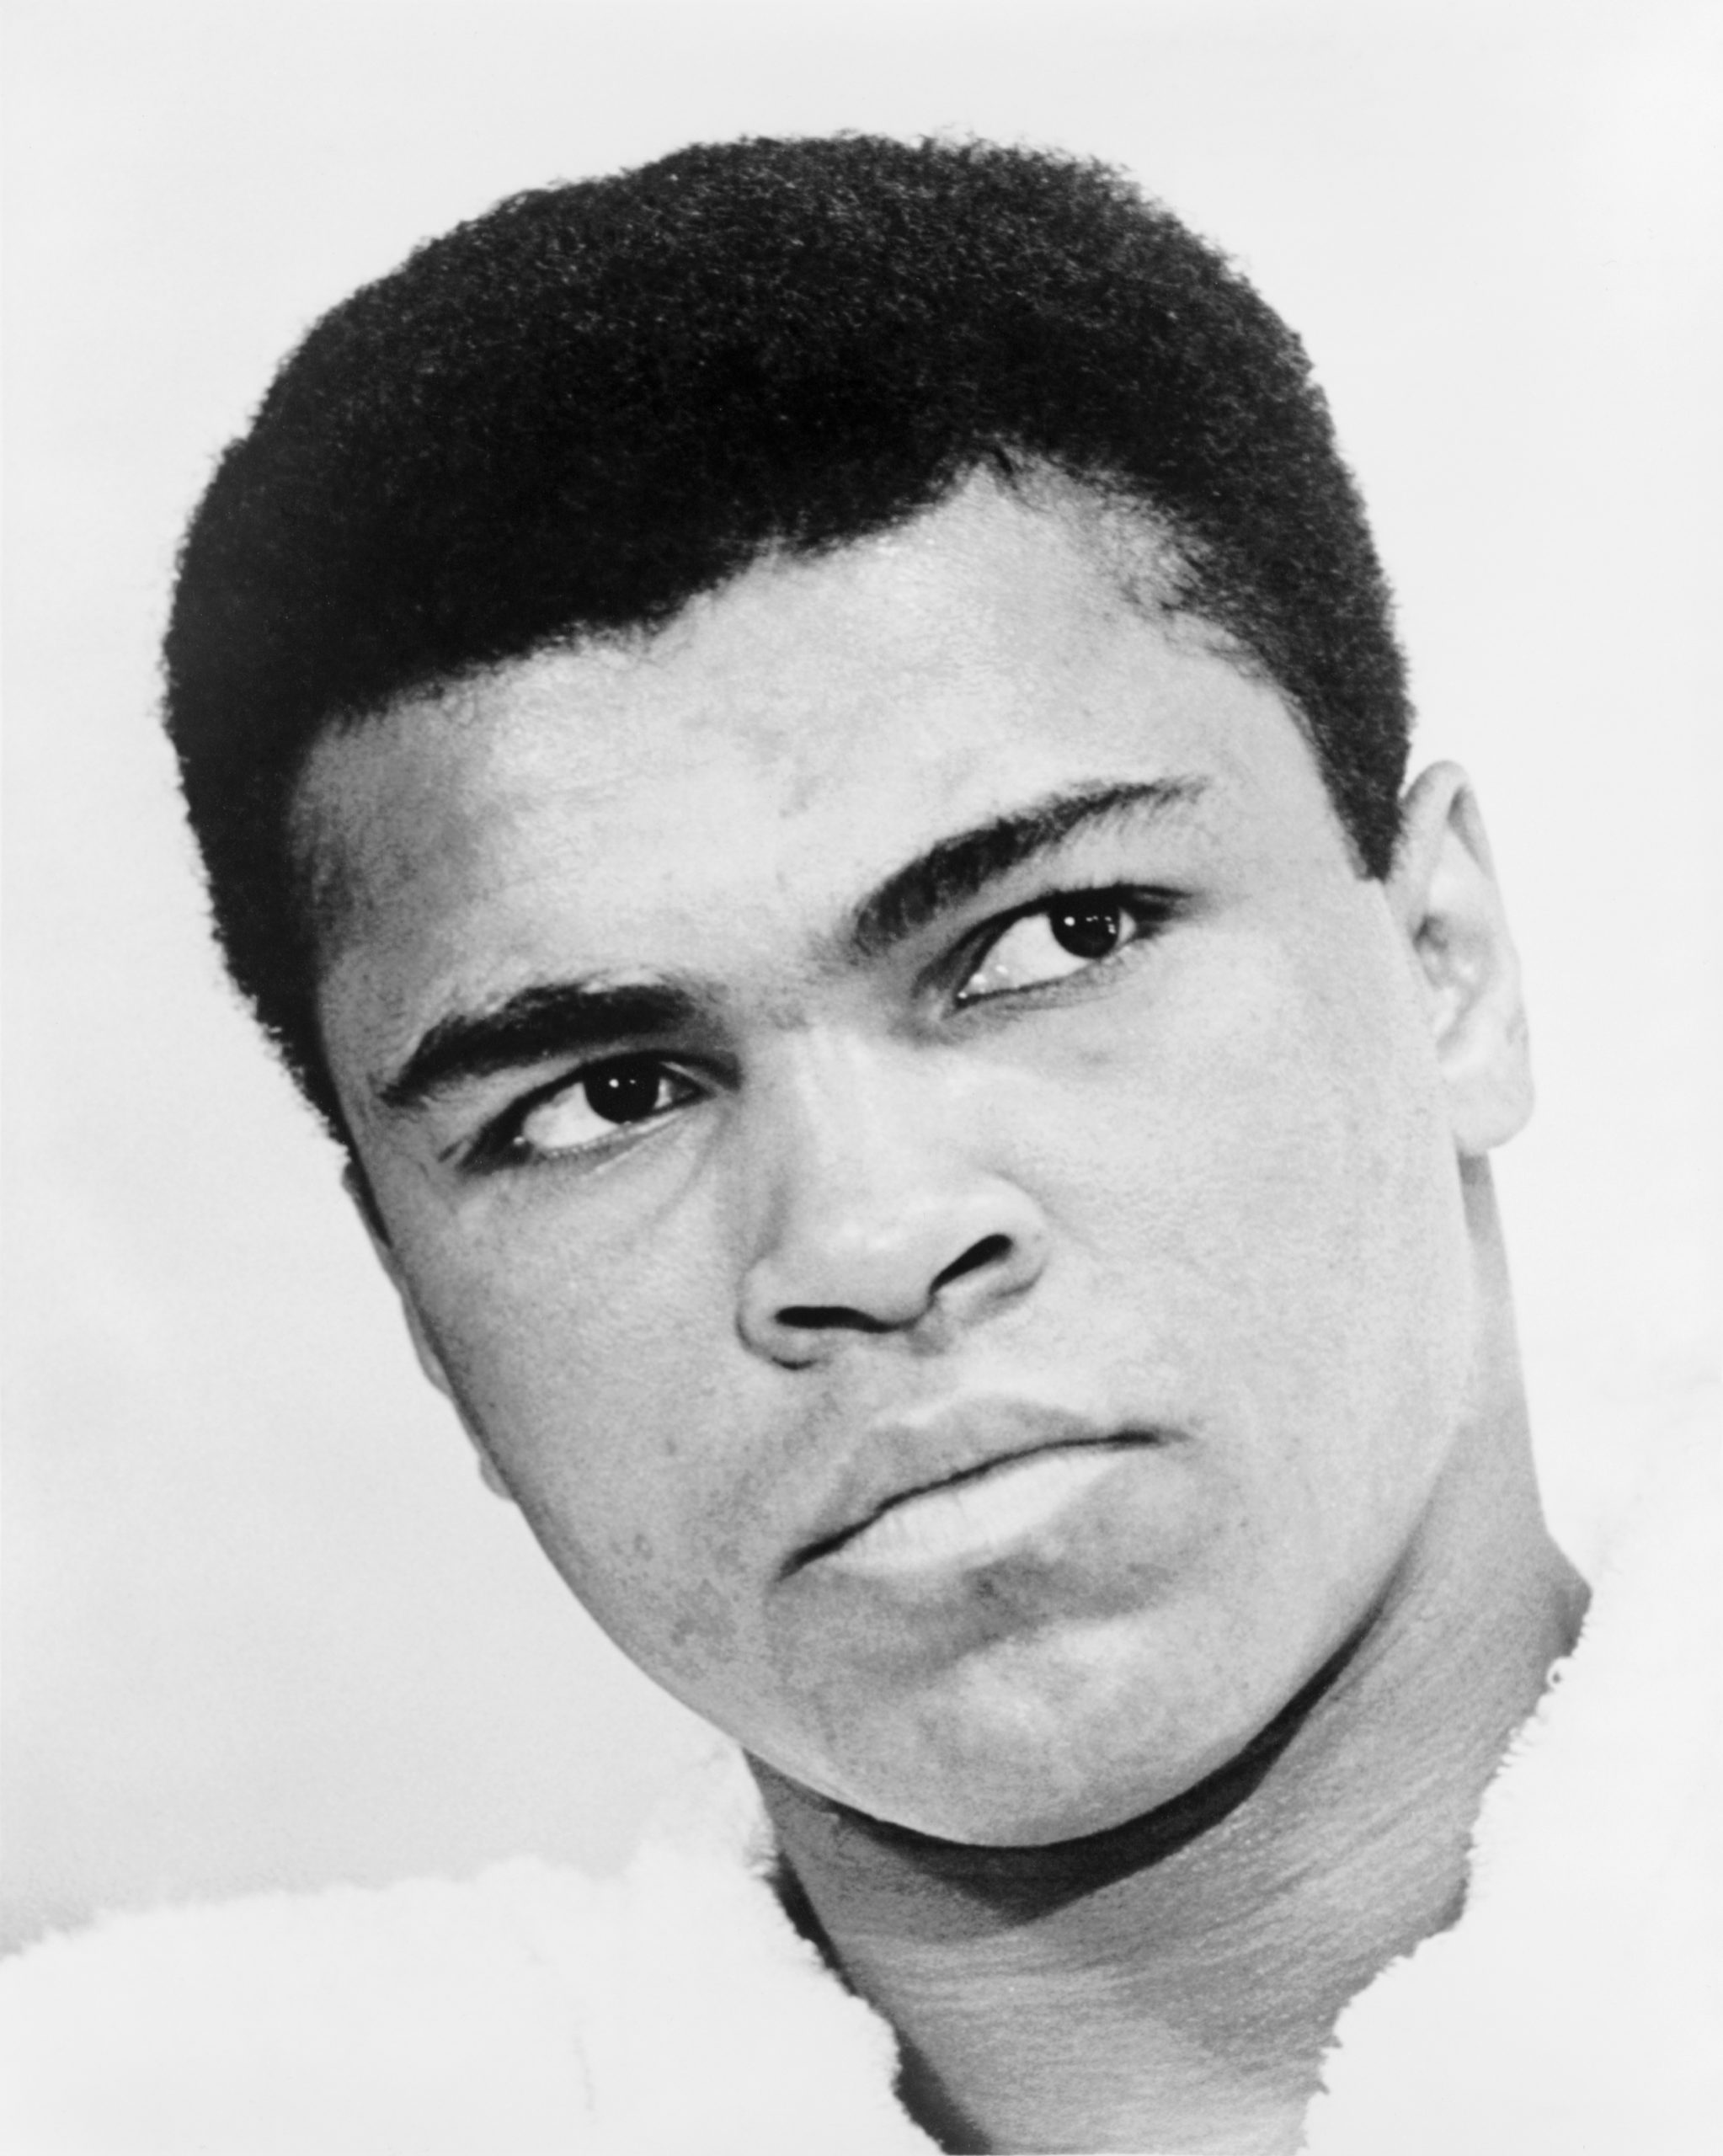 Muhammad Ali – The world has lost a hero